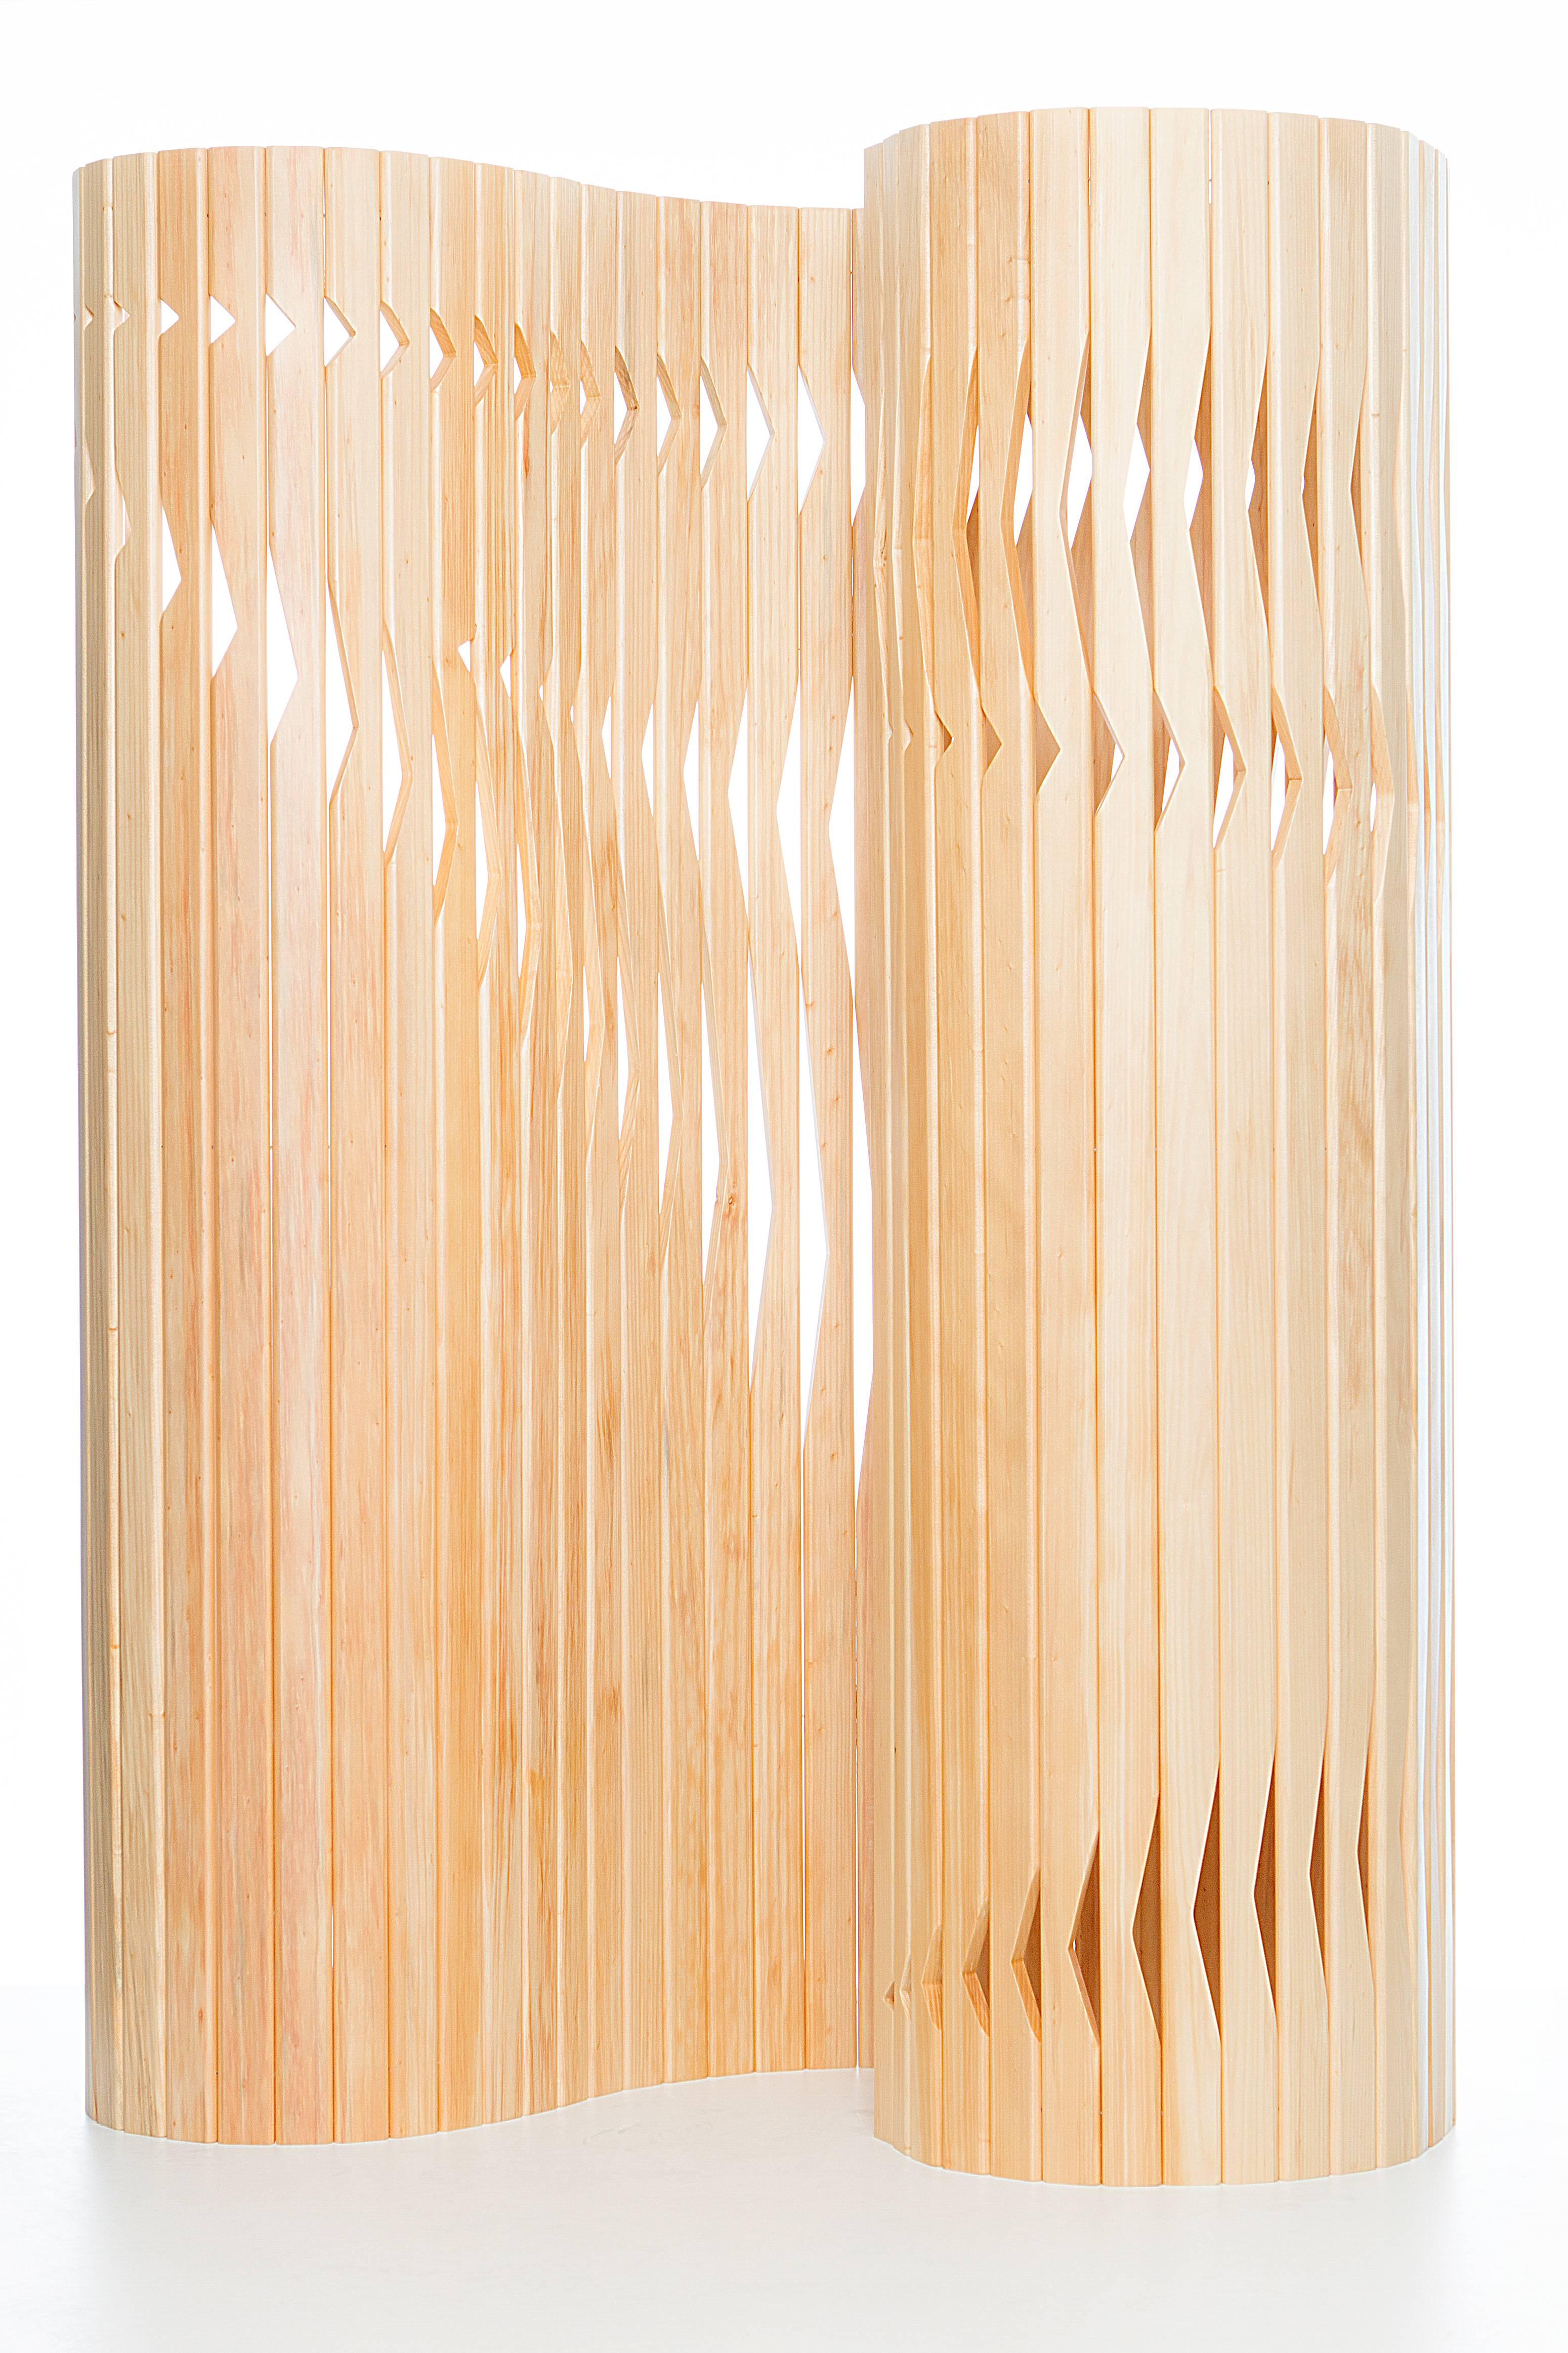 wood partition designs